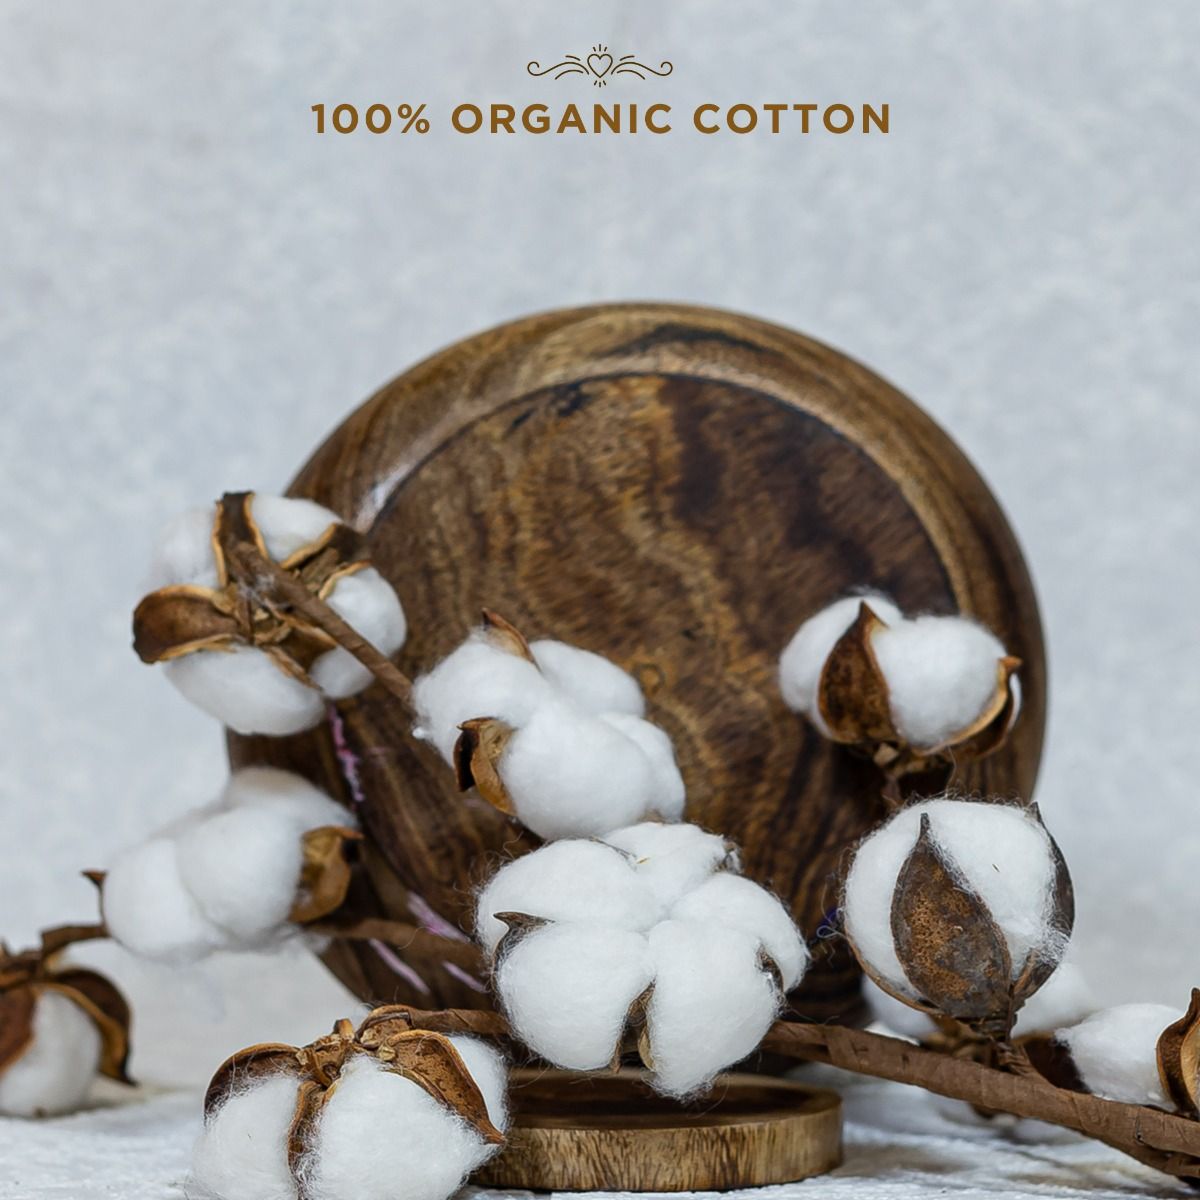 Pee Safe 100% Organic Cotton Biodegradable Regular Sanitary Pads, 10 Count, Pack of 1 